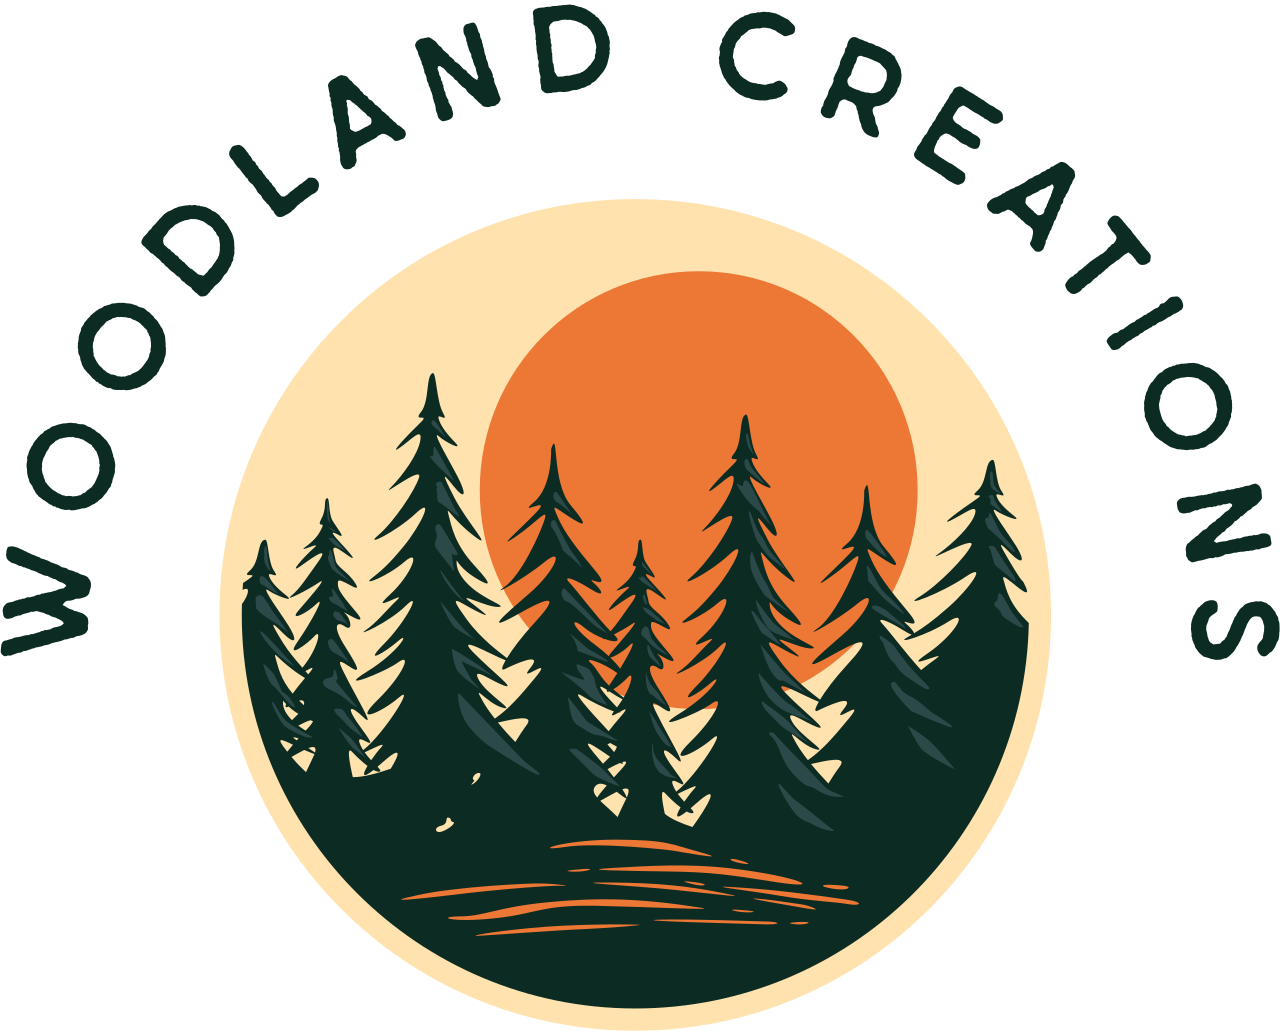 WOODLAND CREATIONS's logo